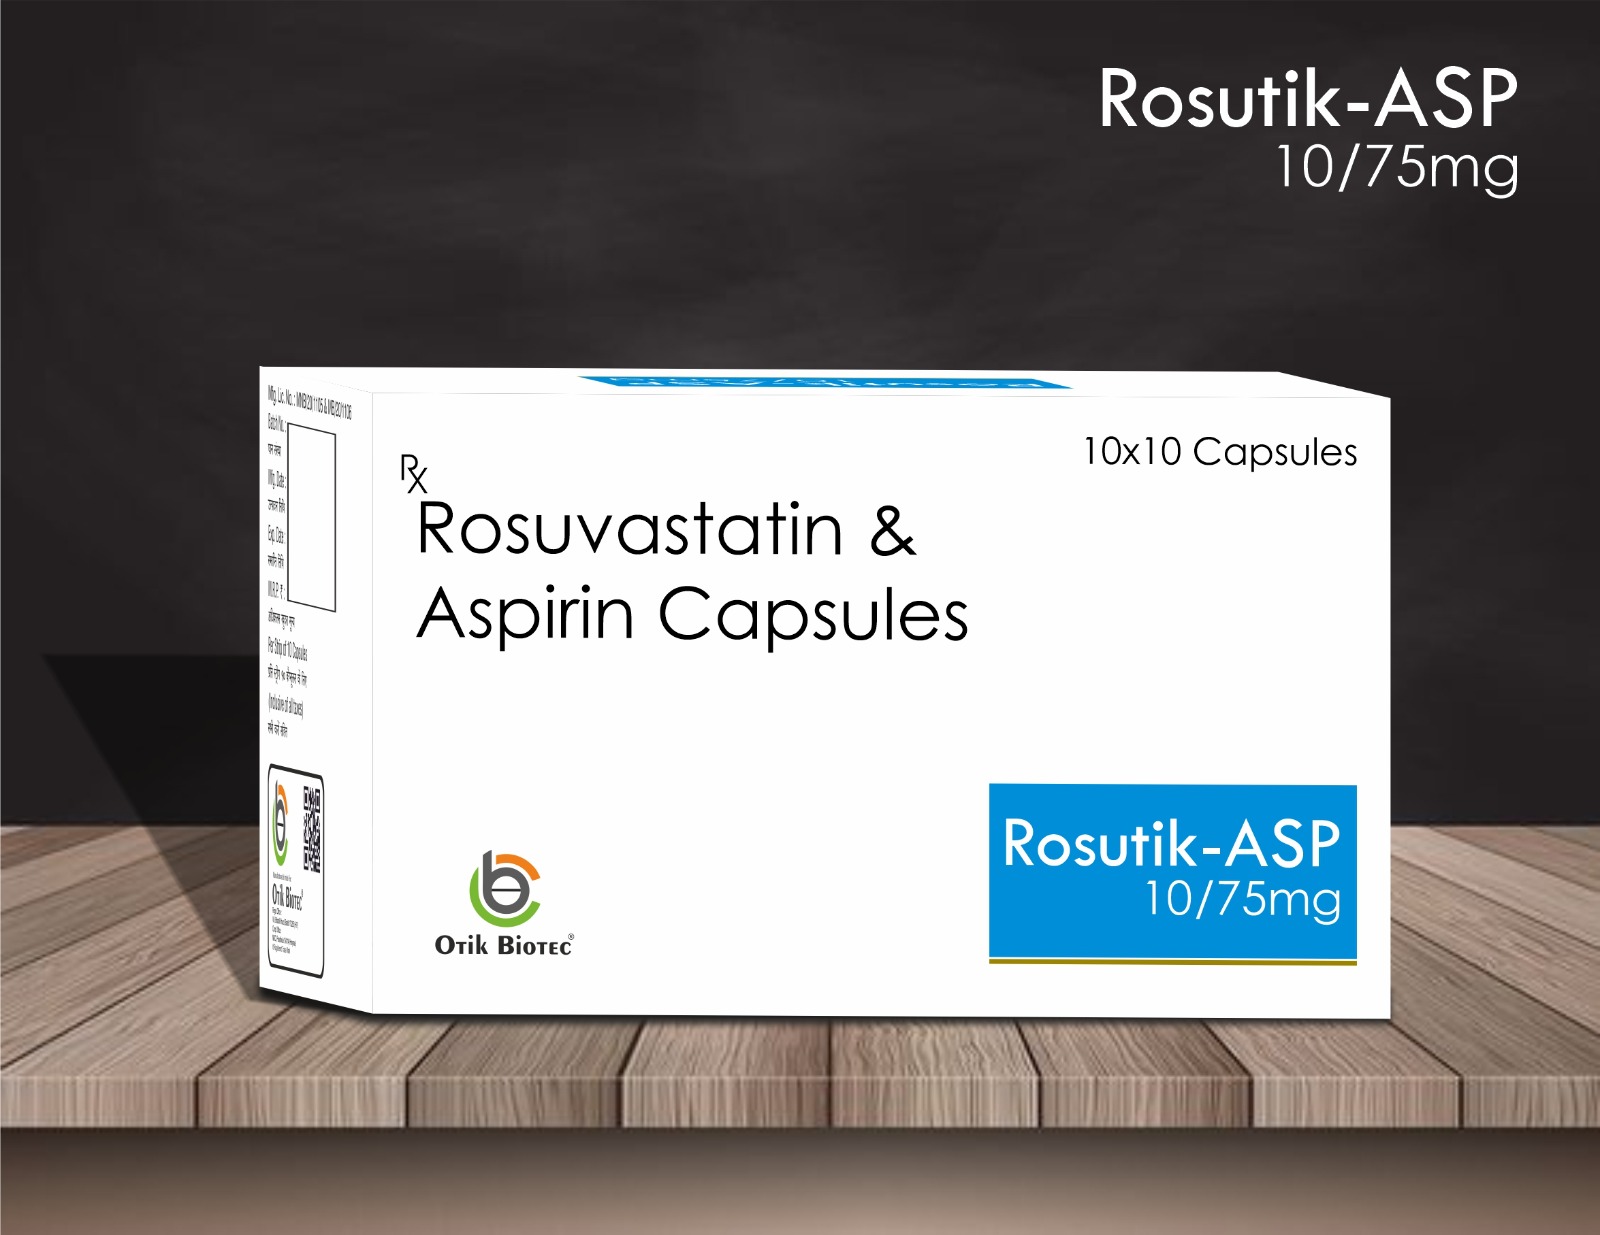 Rosutik-ASP